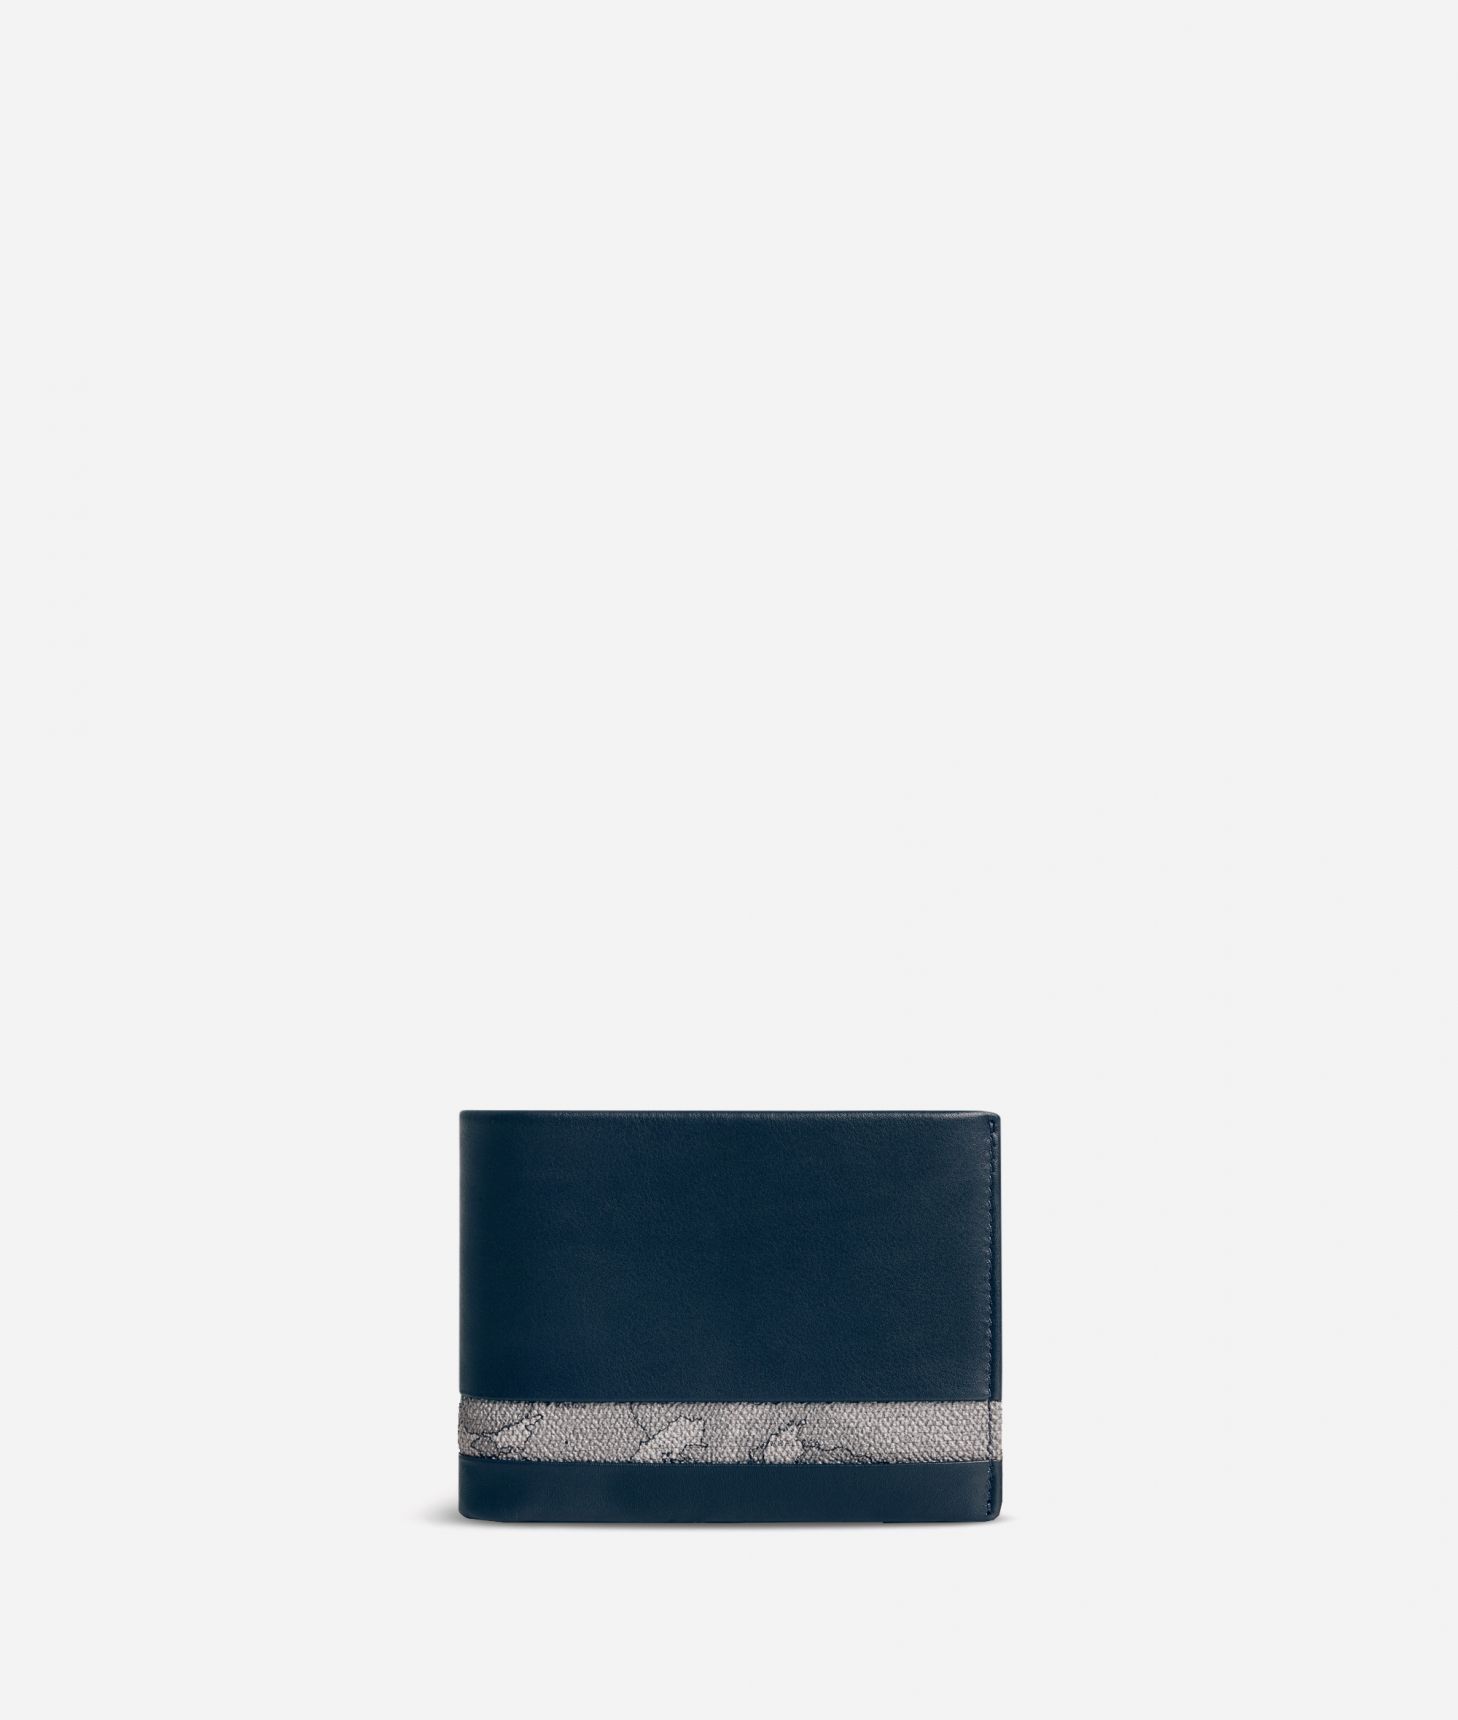 Medium leather wallet Geo Dark fabric trims,front